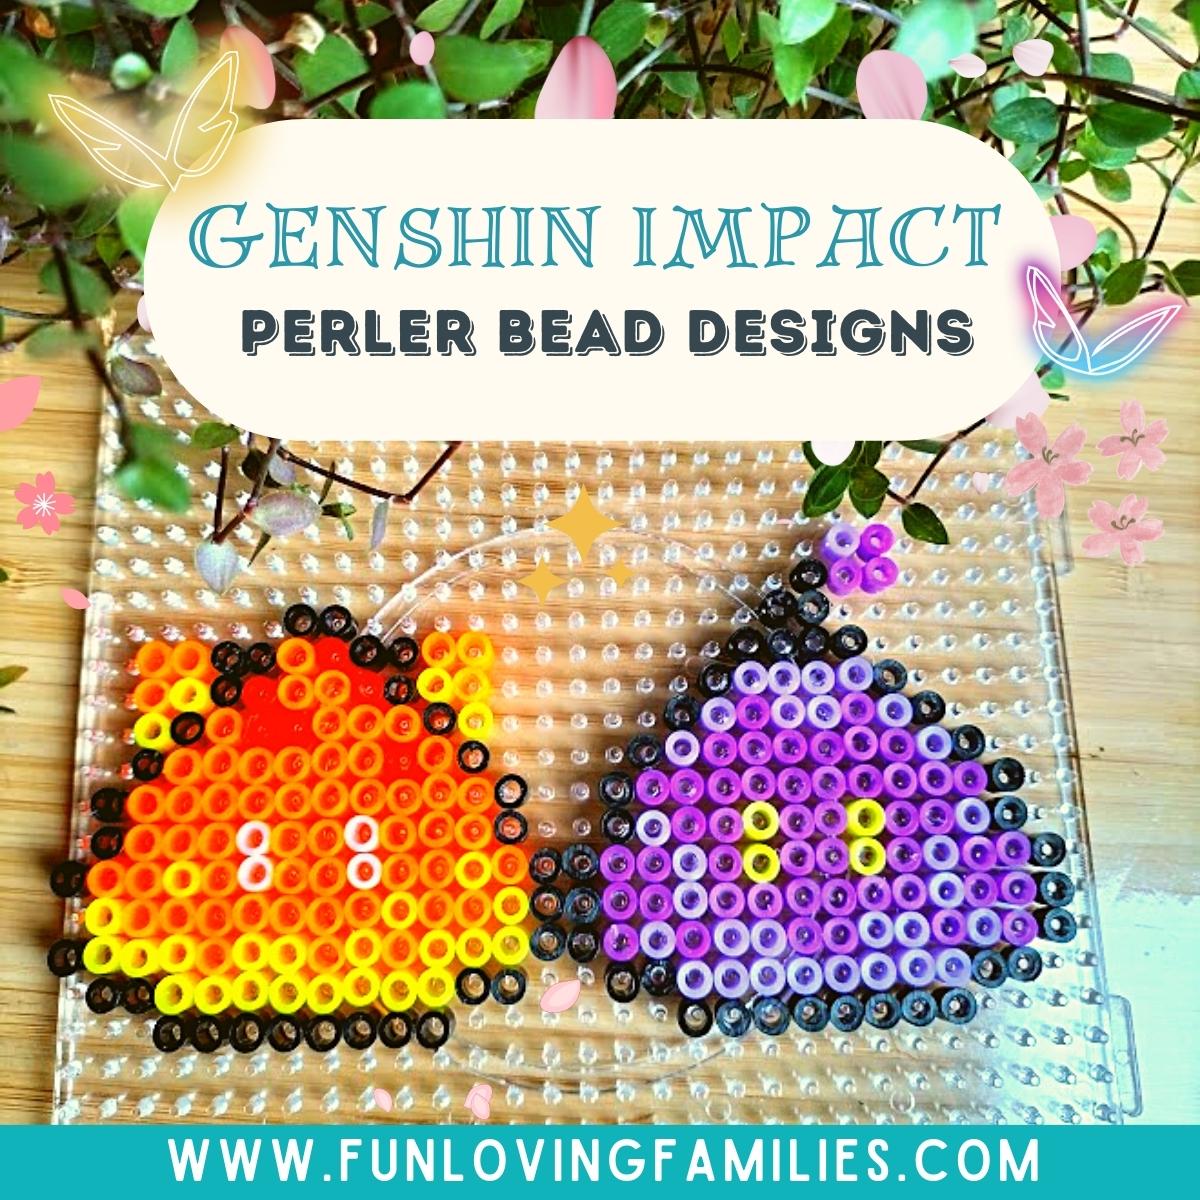 25 Genshin Impact Perler Bead Patterns, Designs and Ideas